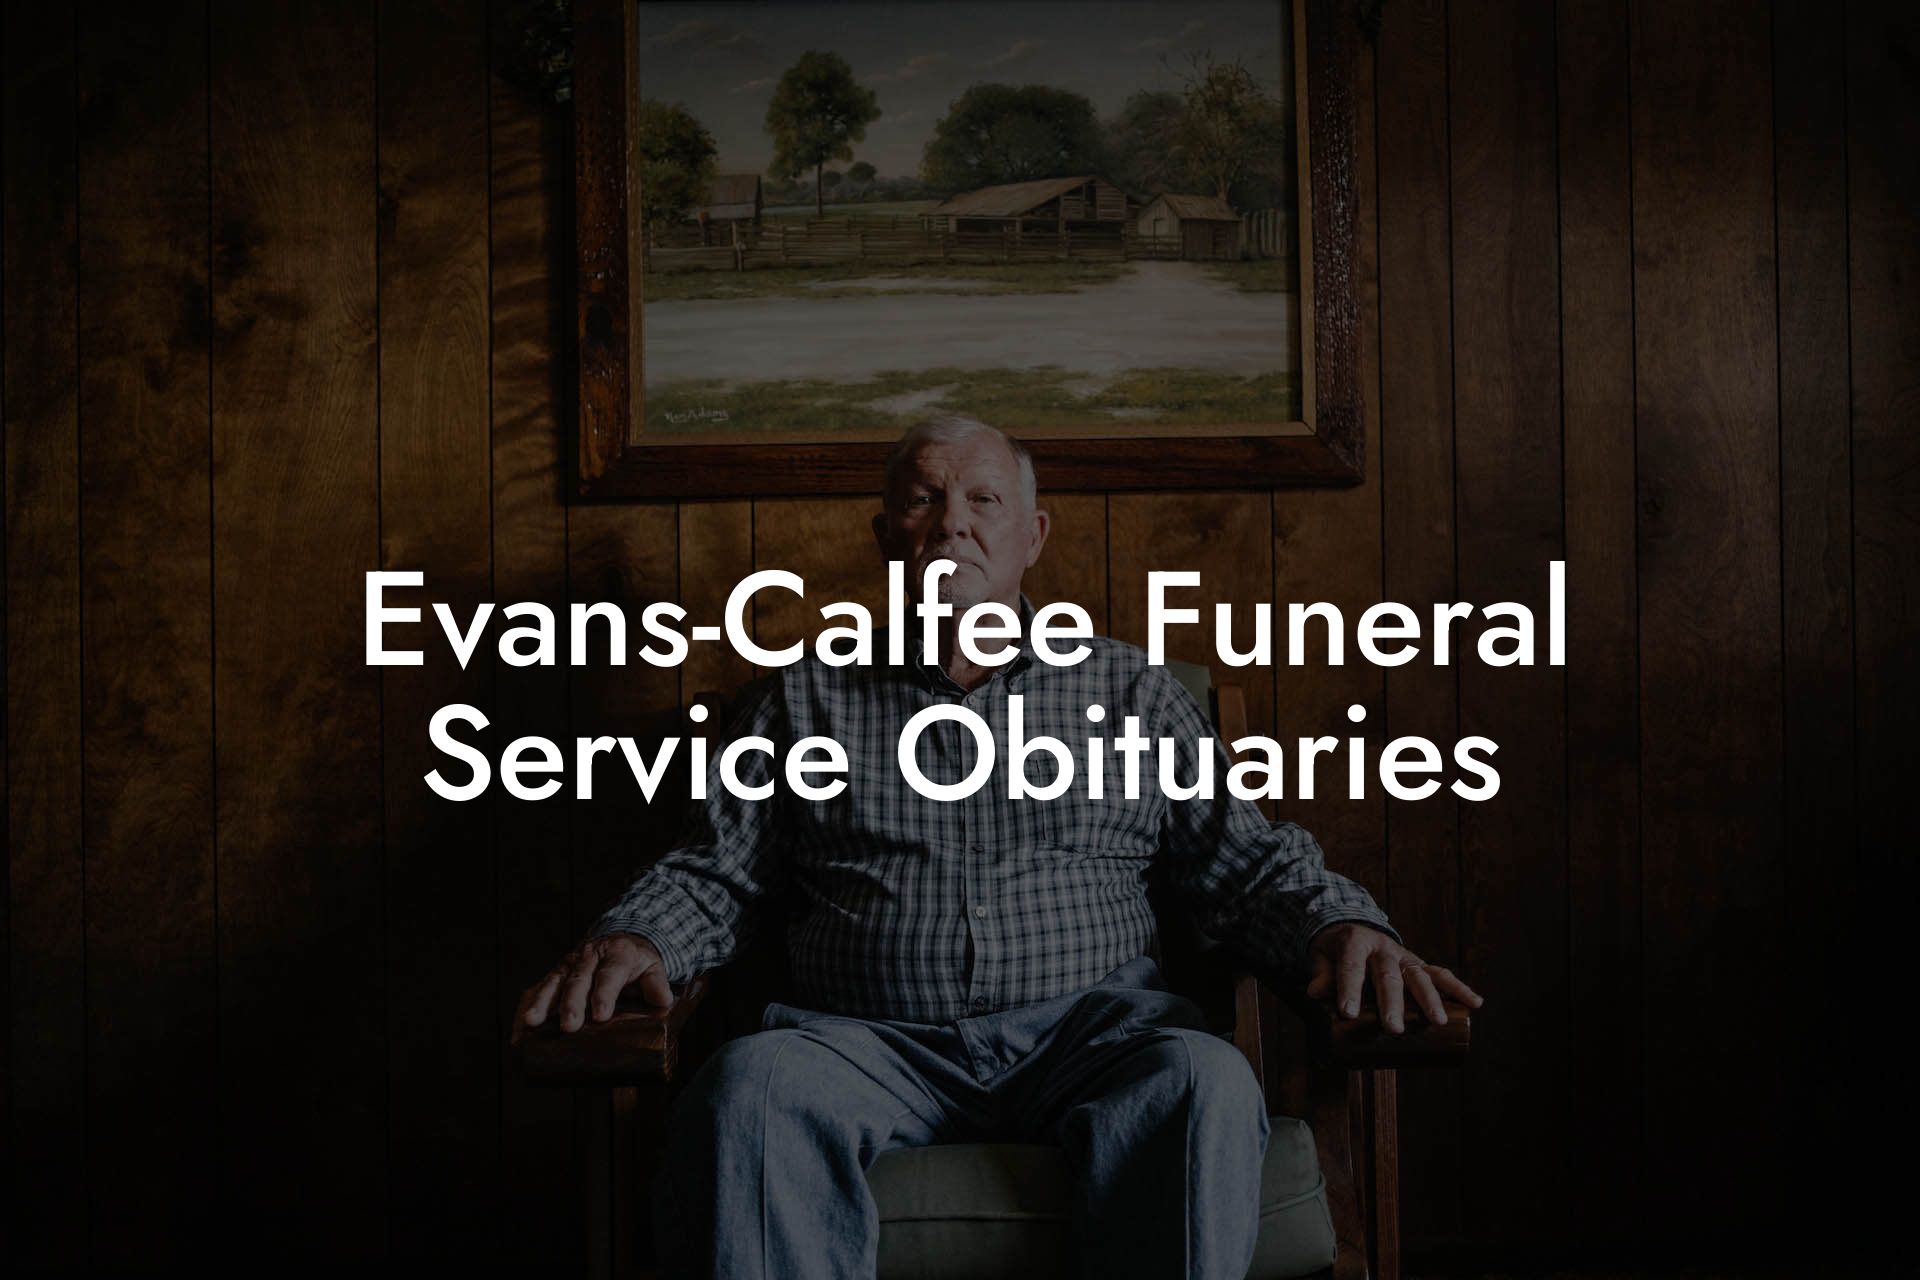 Evans-Calfee Funeral Service Obituaries